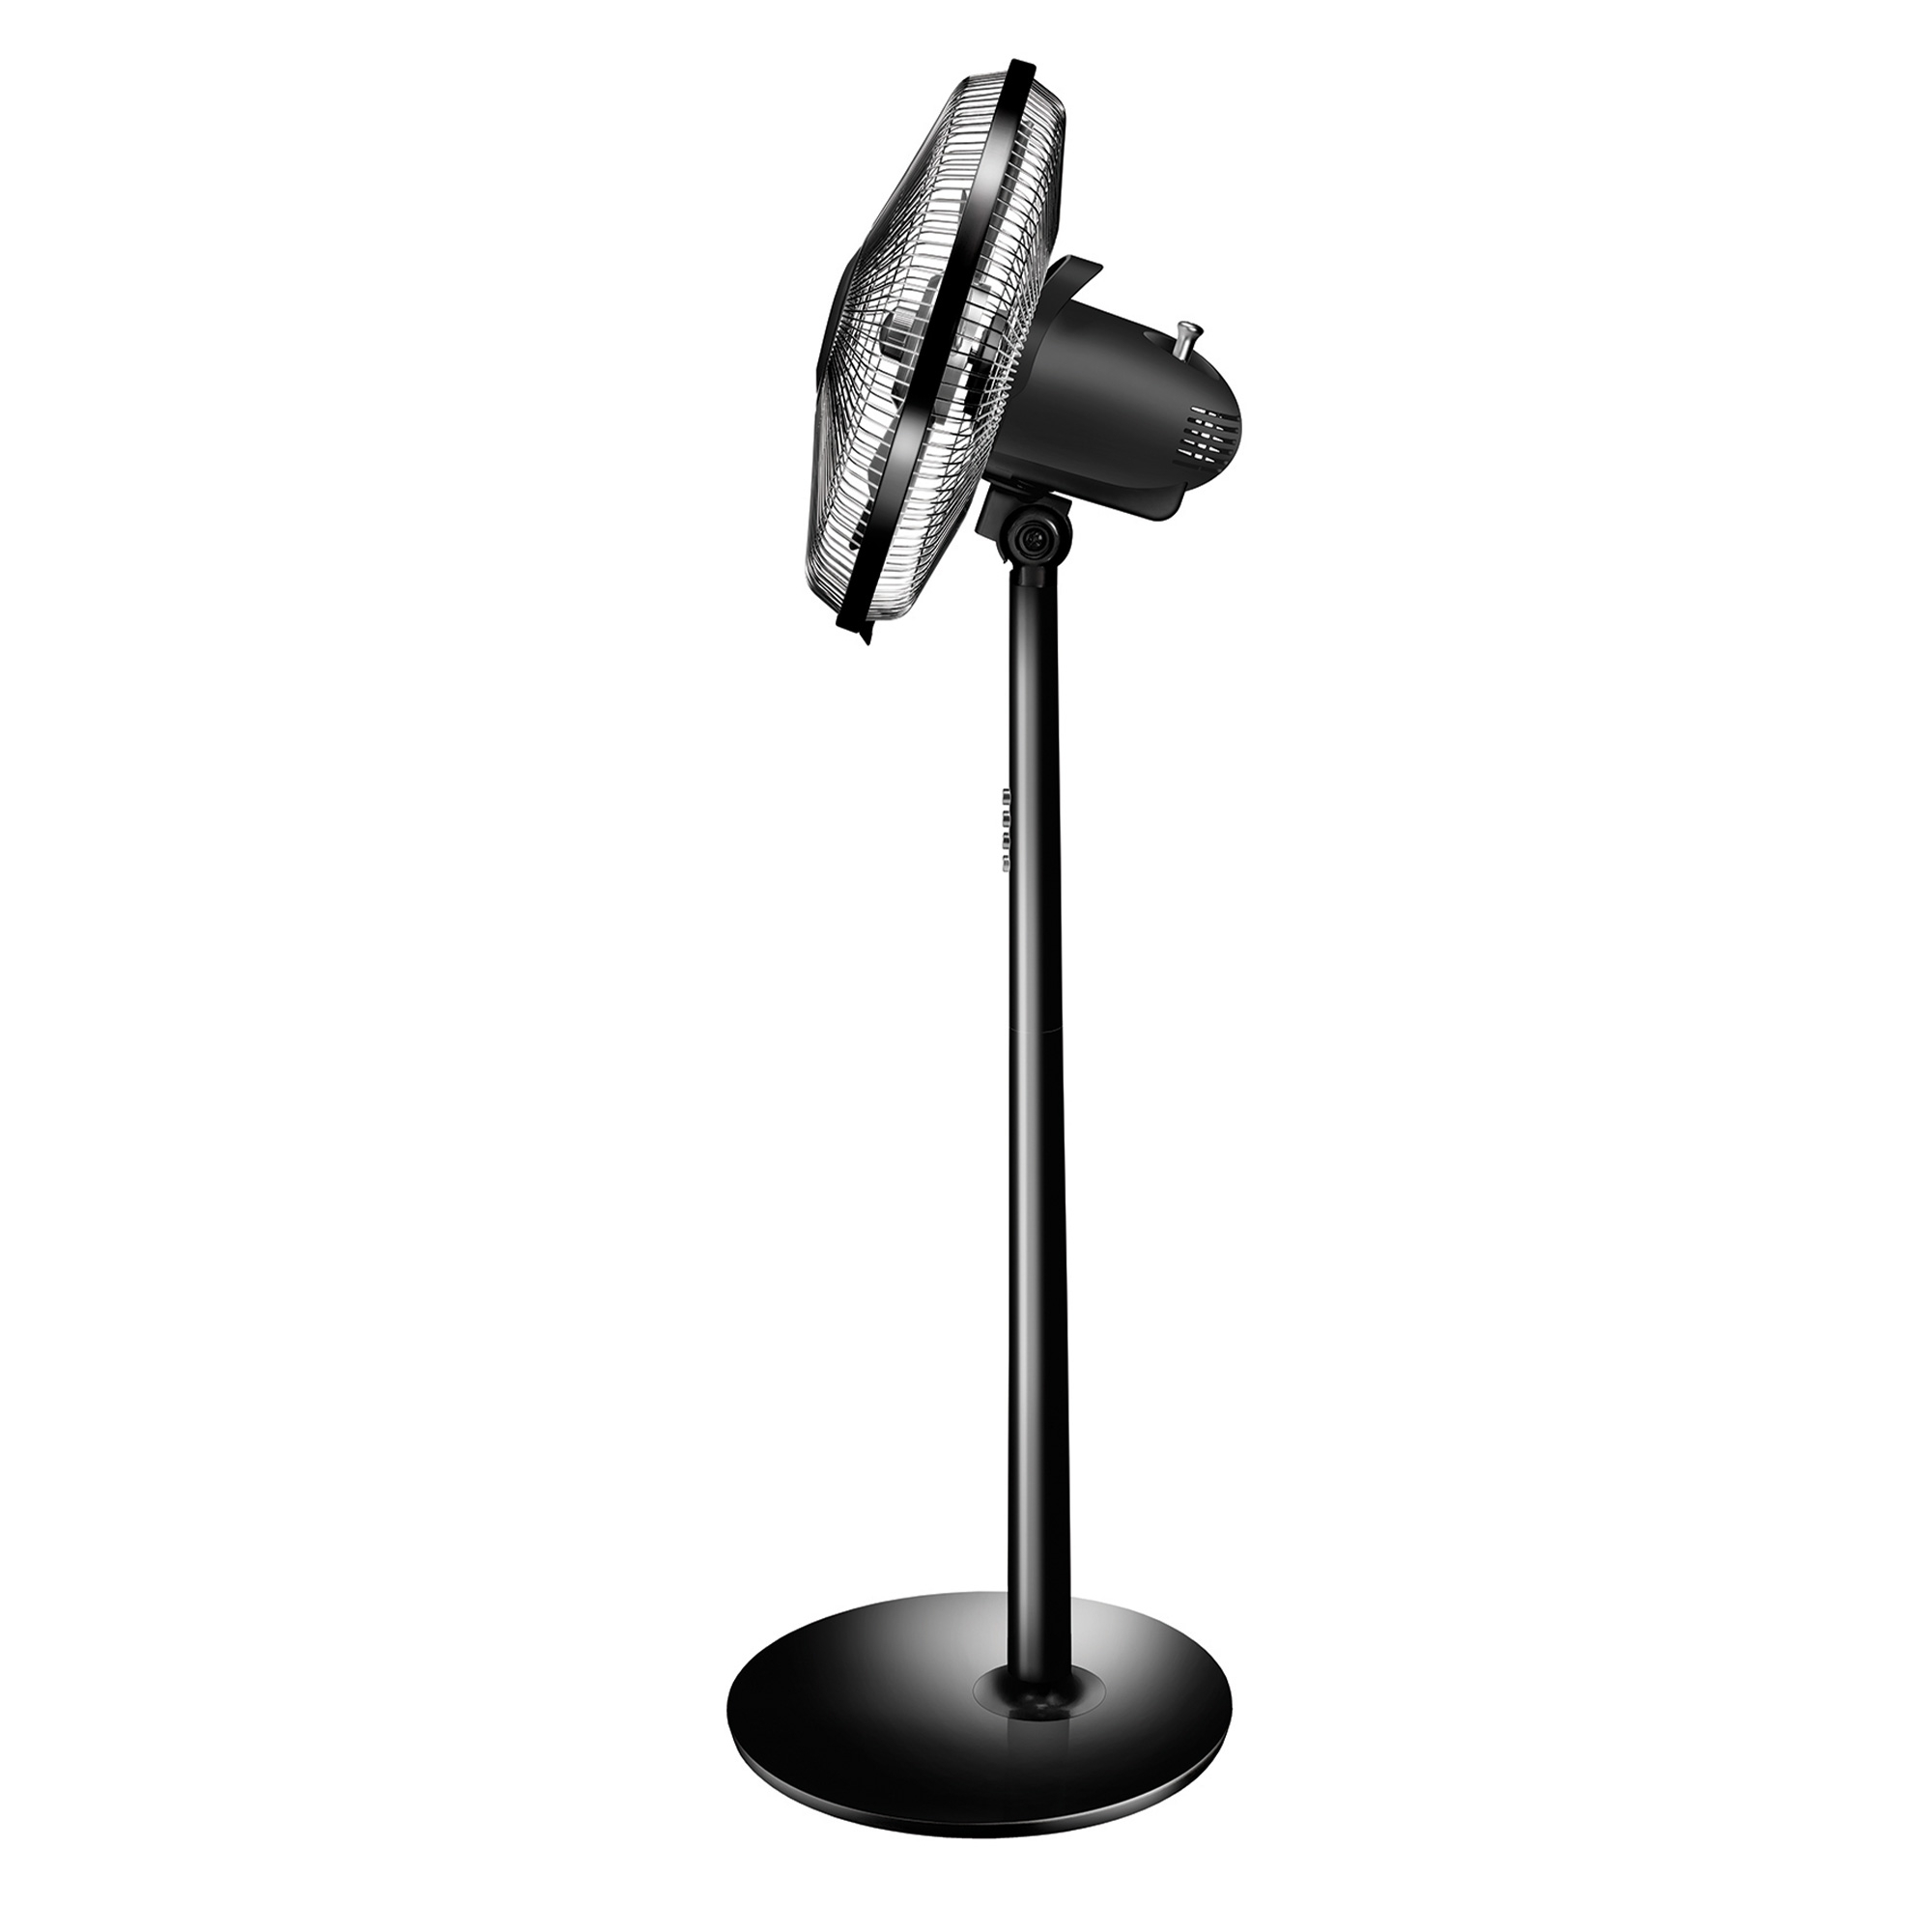 Unold - Stand fan Silverline - Black 40 cm